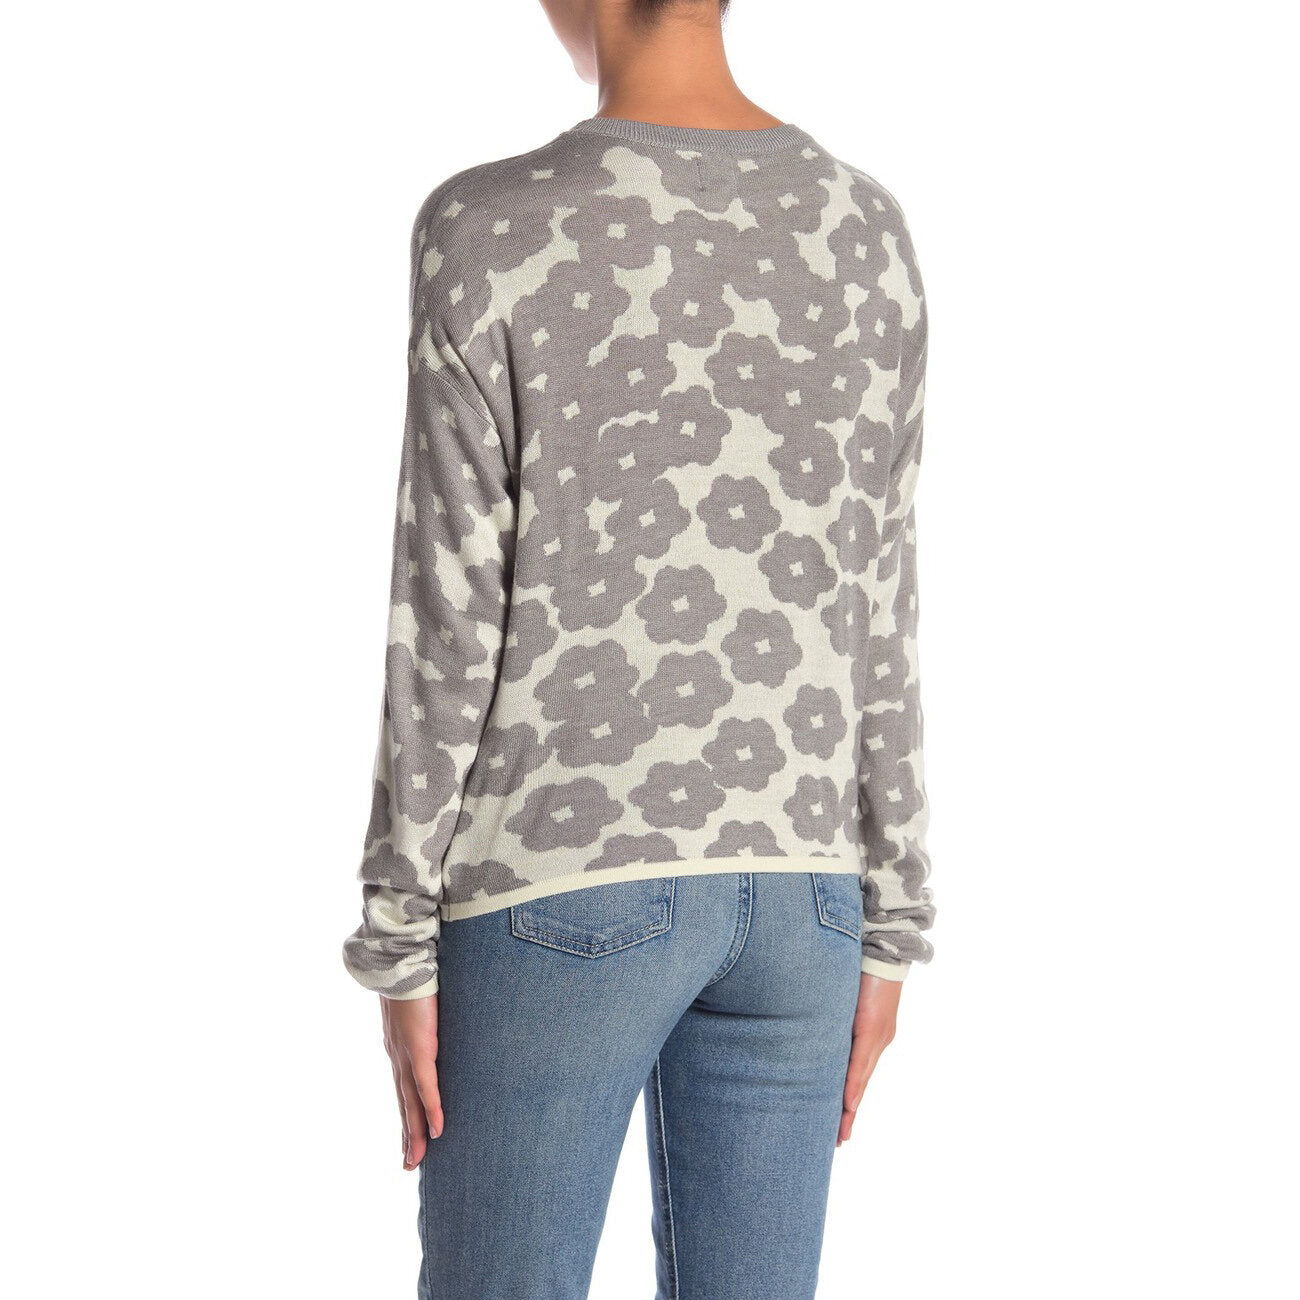 John + Jenn Fionne Floral Sweater - size Medium